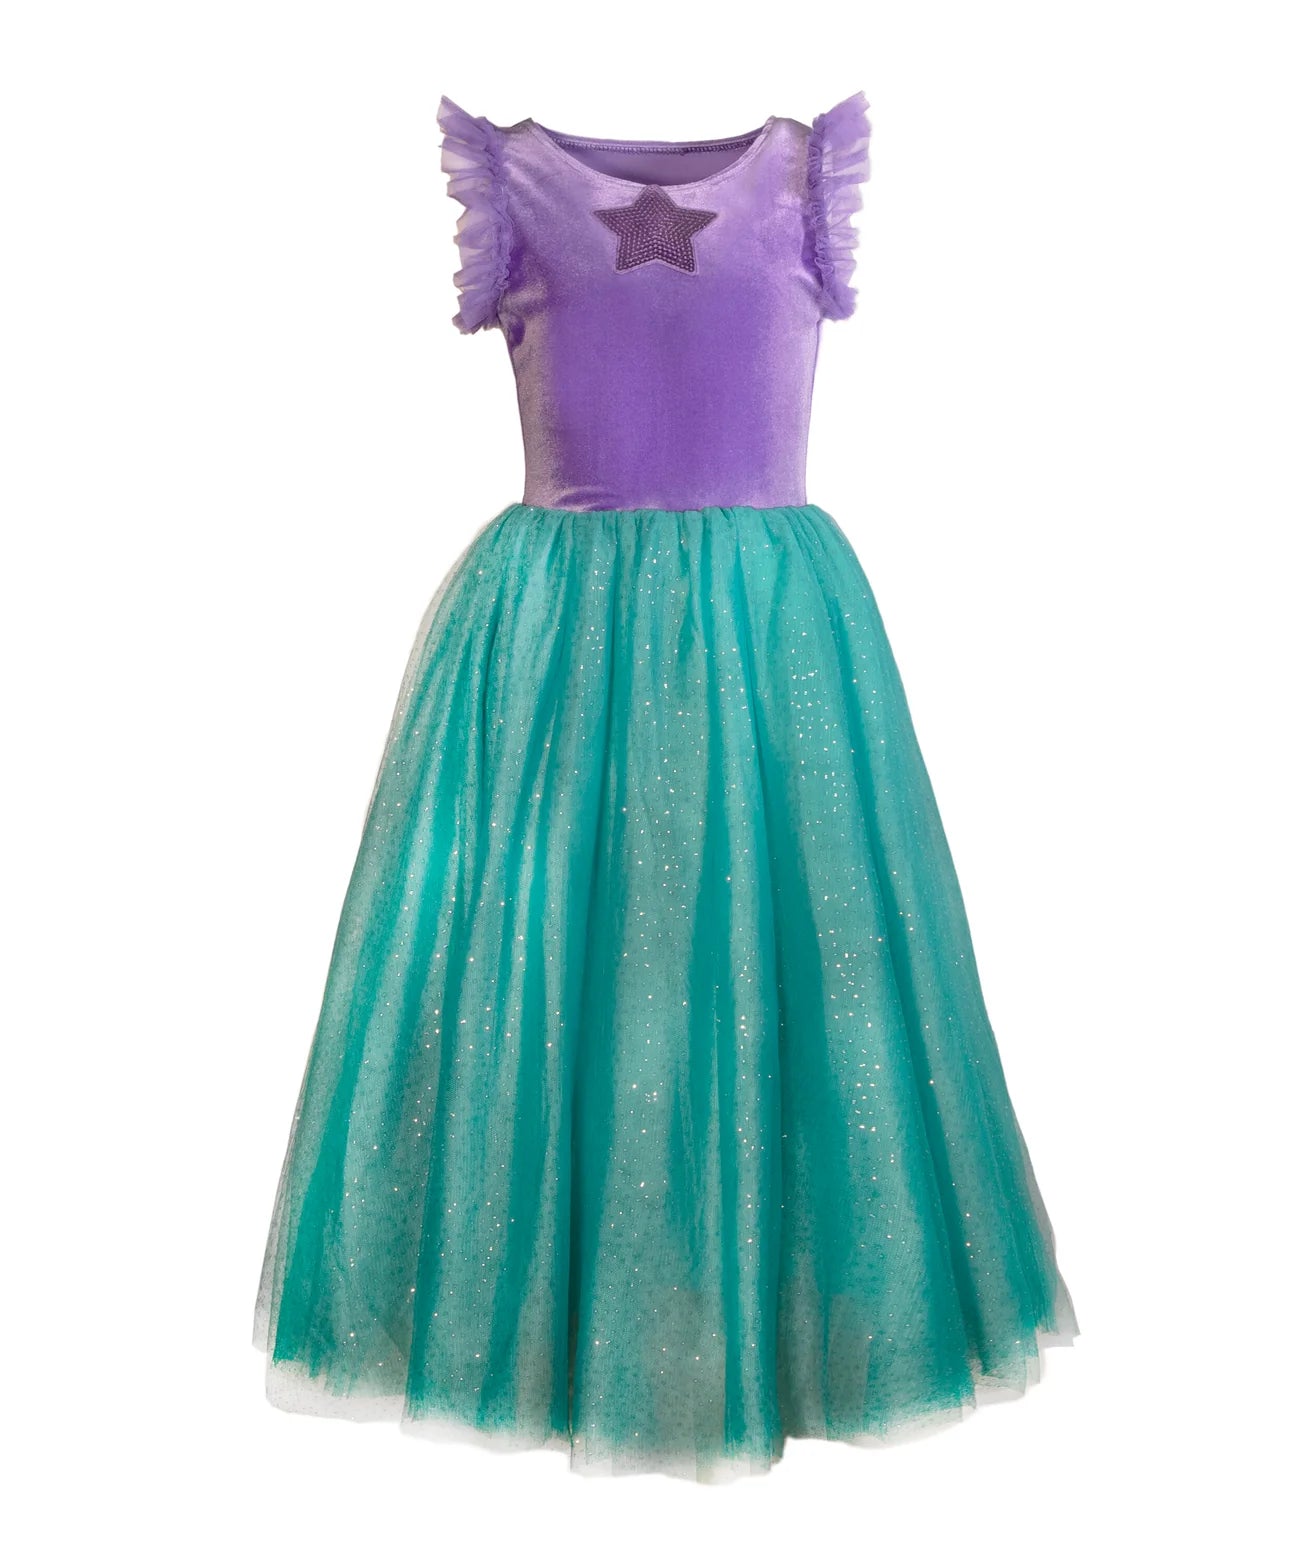 Joy by Teresita Orillac: The Mermaid Princess Costume Dress